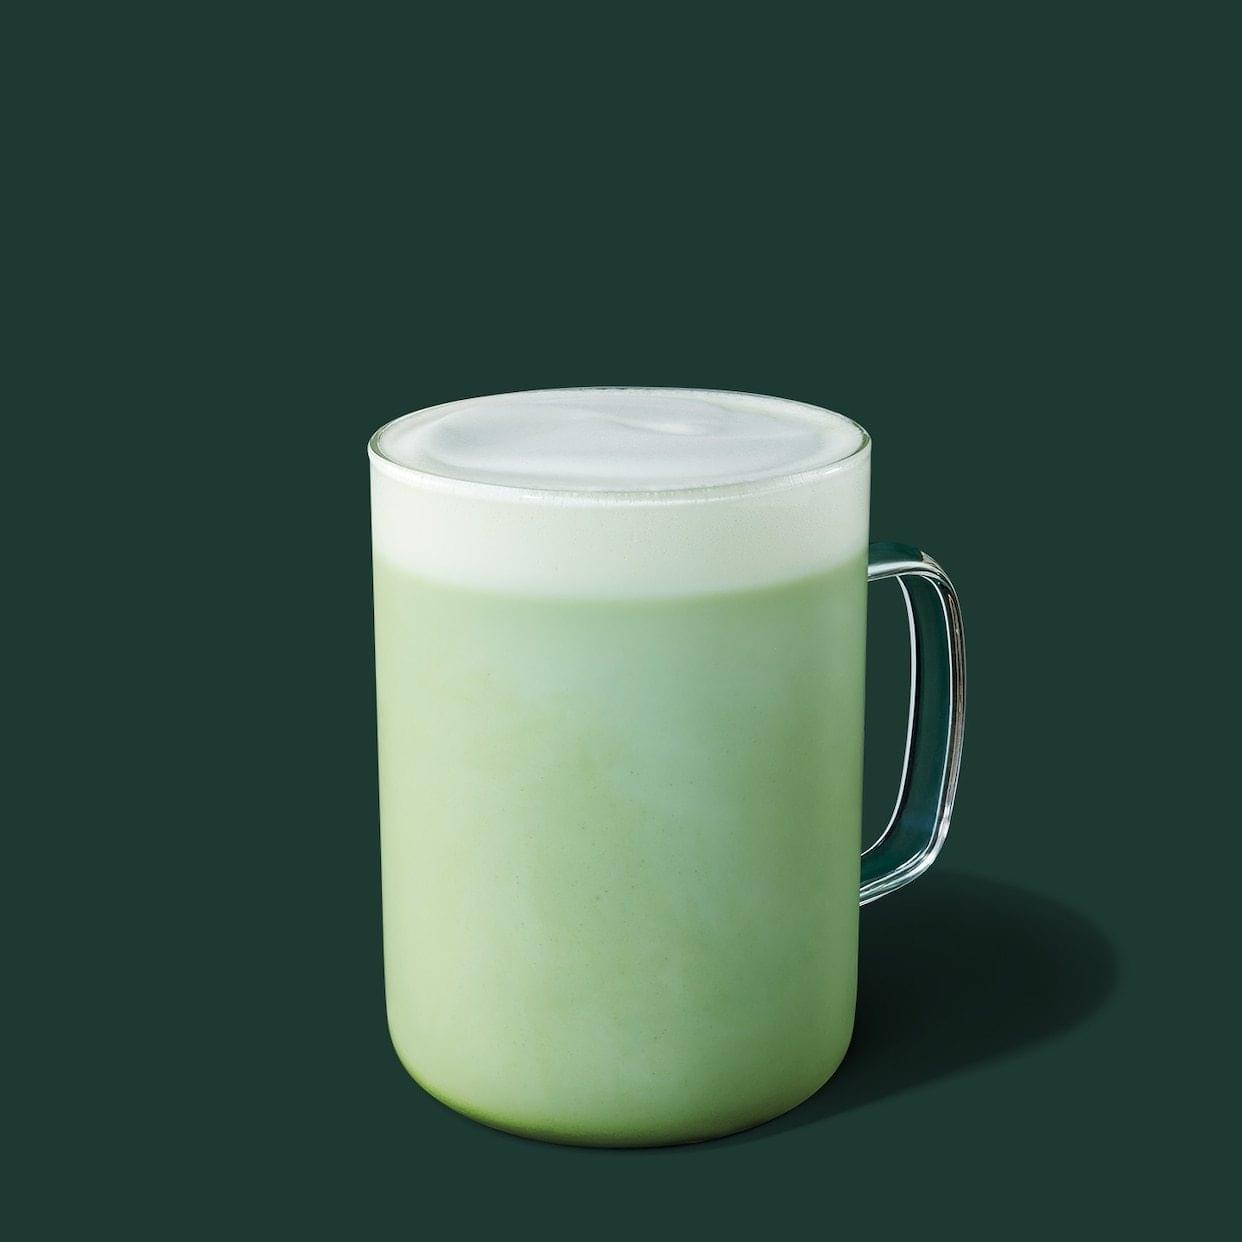 Starbucks Grande Matcha Green Tea Latte Nutrition Facts